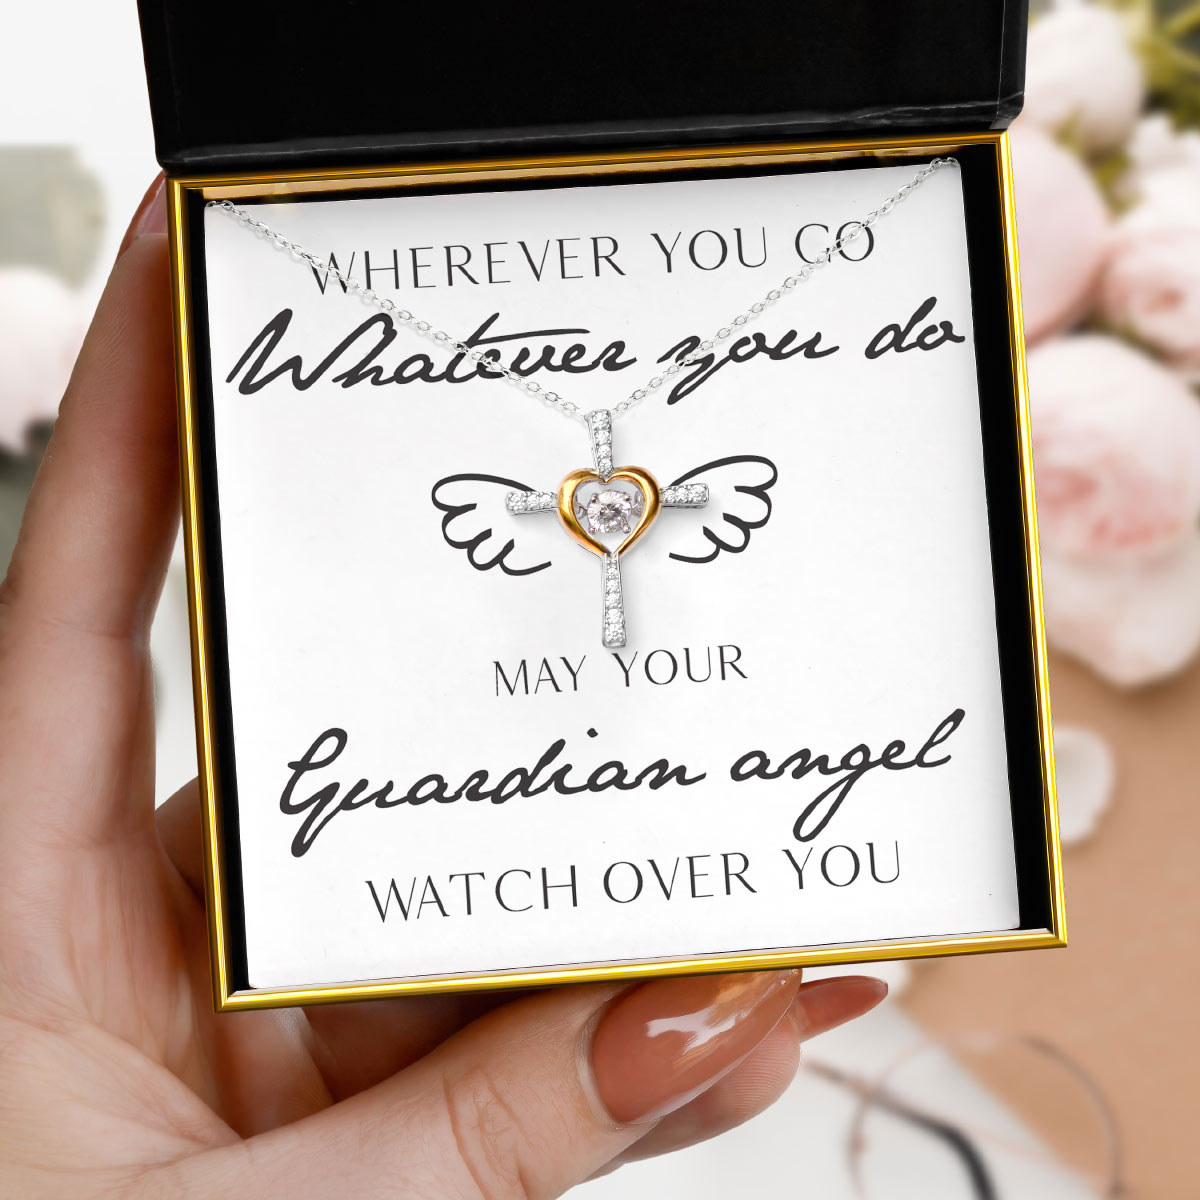 Guardian Angel - Dancing Crystal Cross Necklace Gift Set